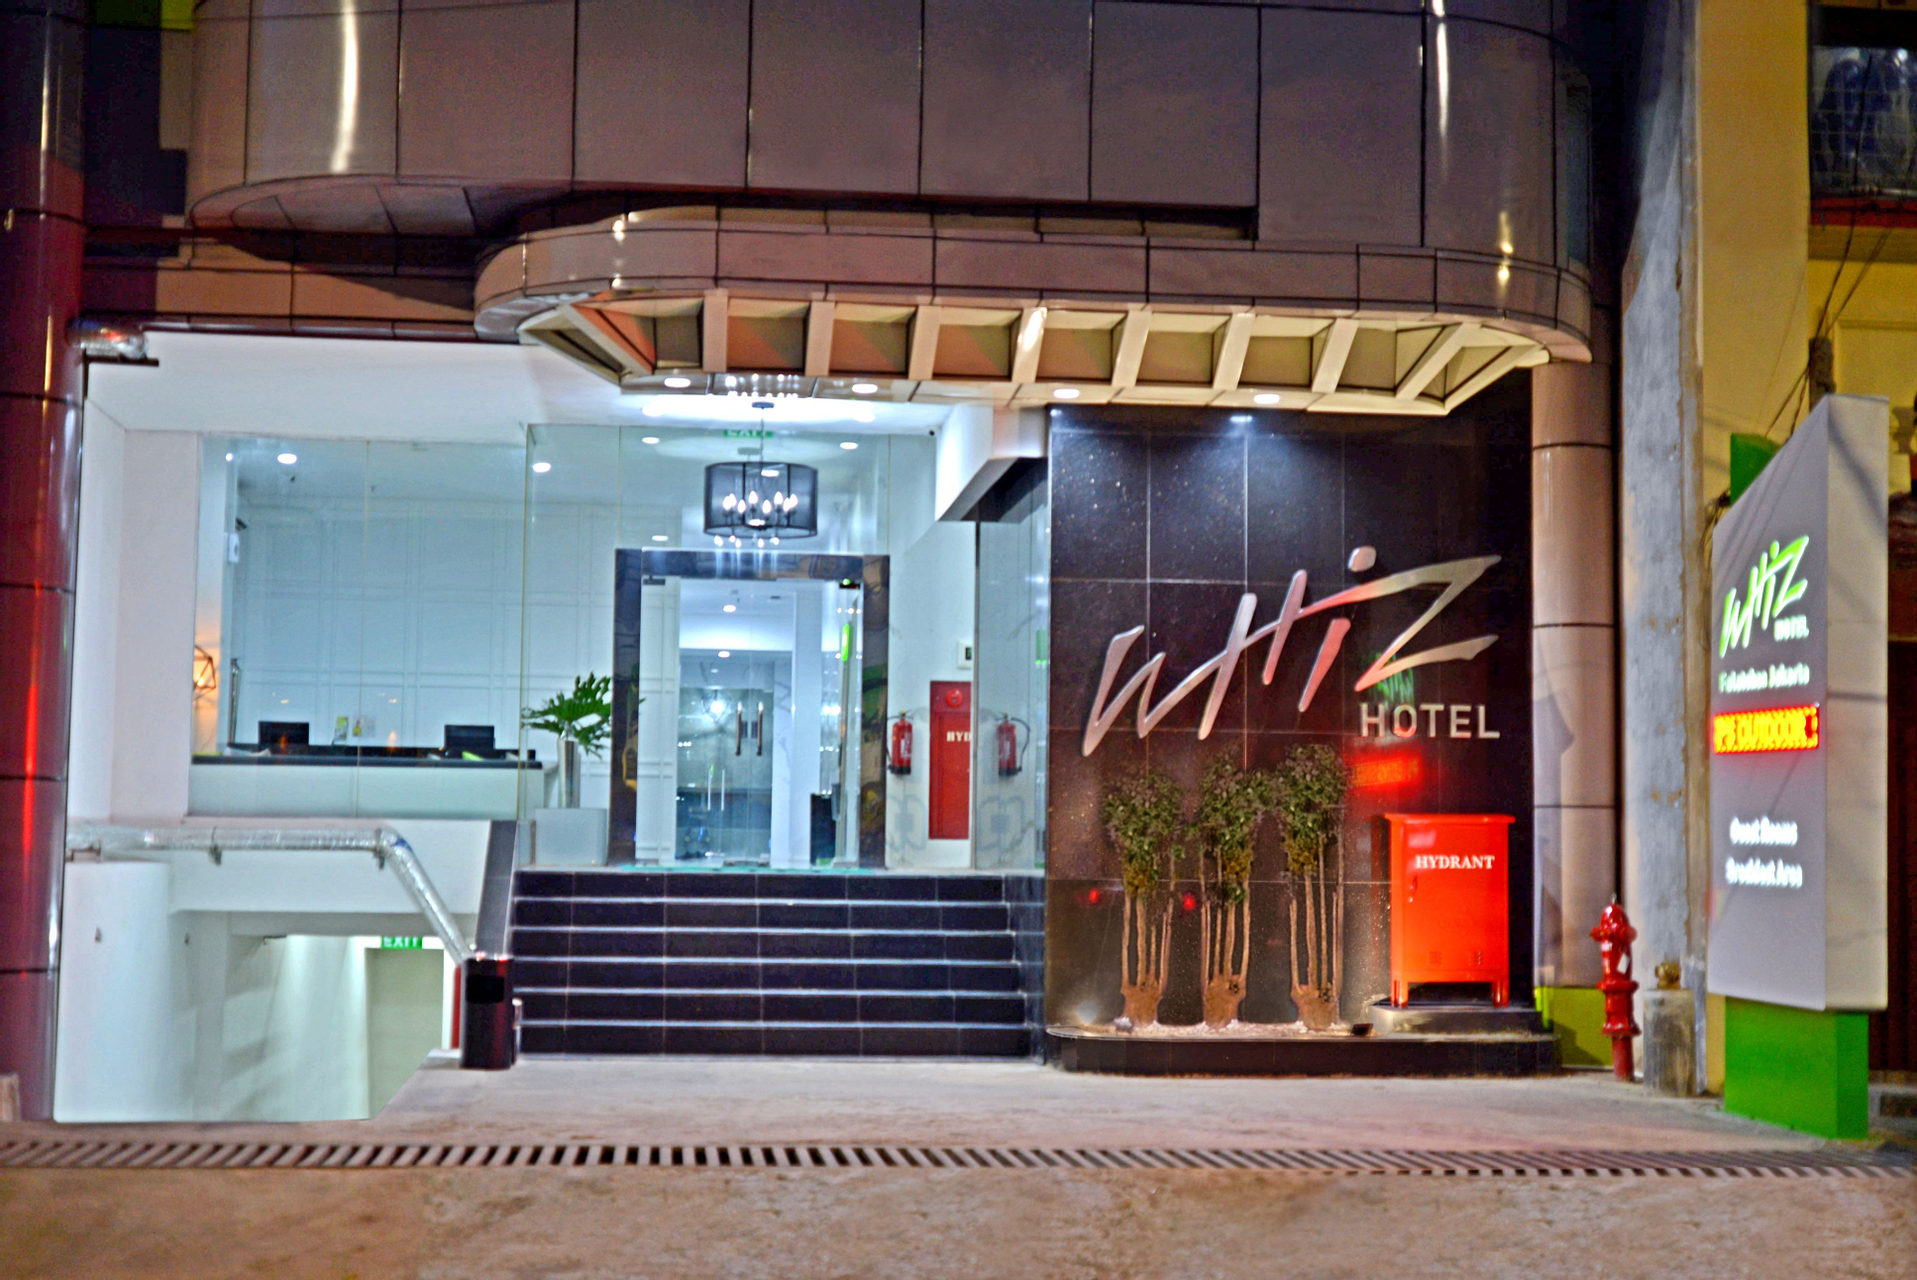 Exterior & Views 2, Whiz Hotel Falatehan Jakarta, Jakarta Selatan